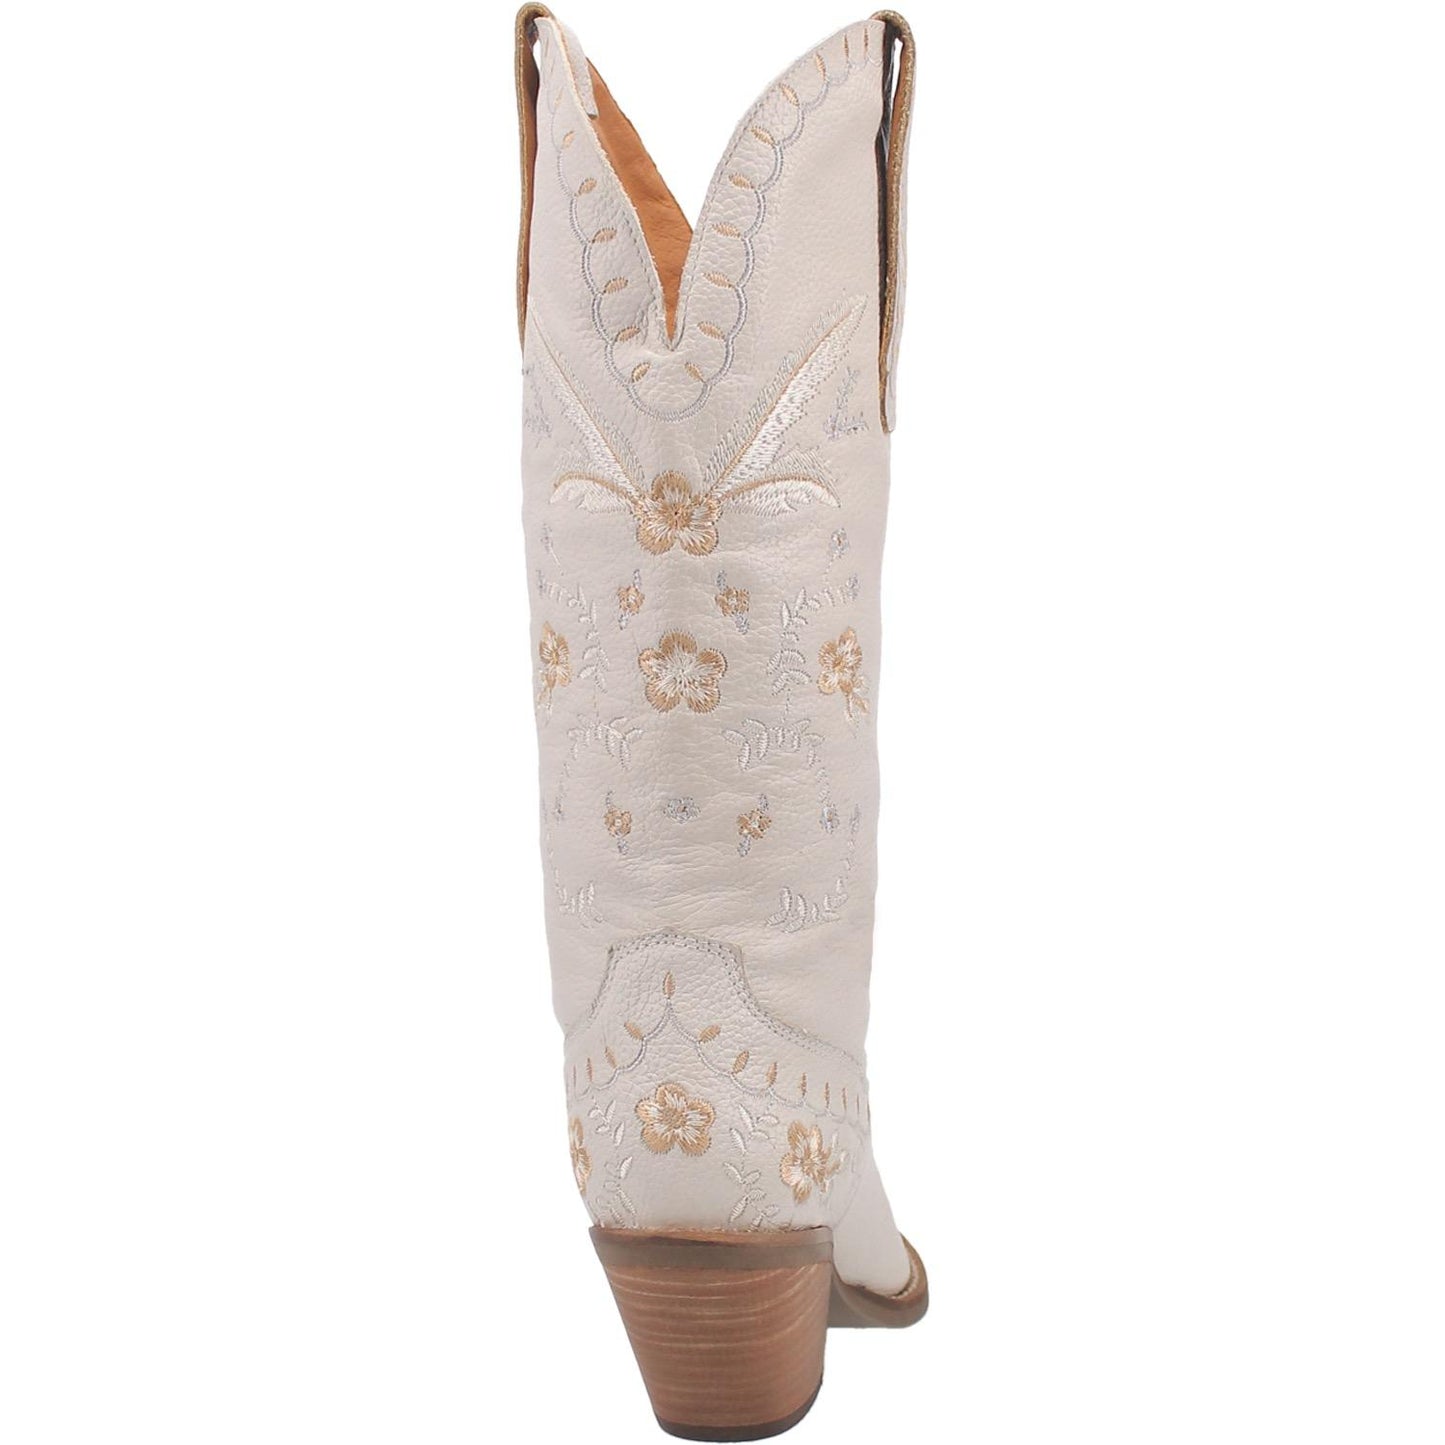 Dingo Ladies Full Bloom White Almond Toe Boots DI939-WH